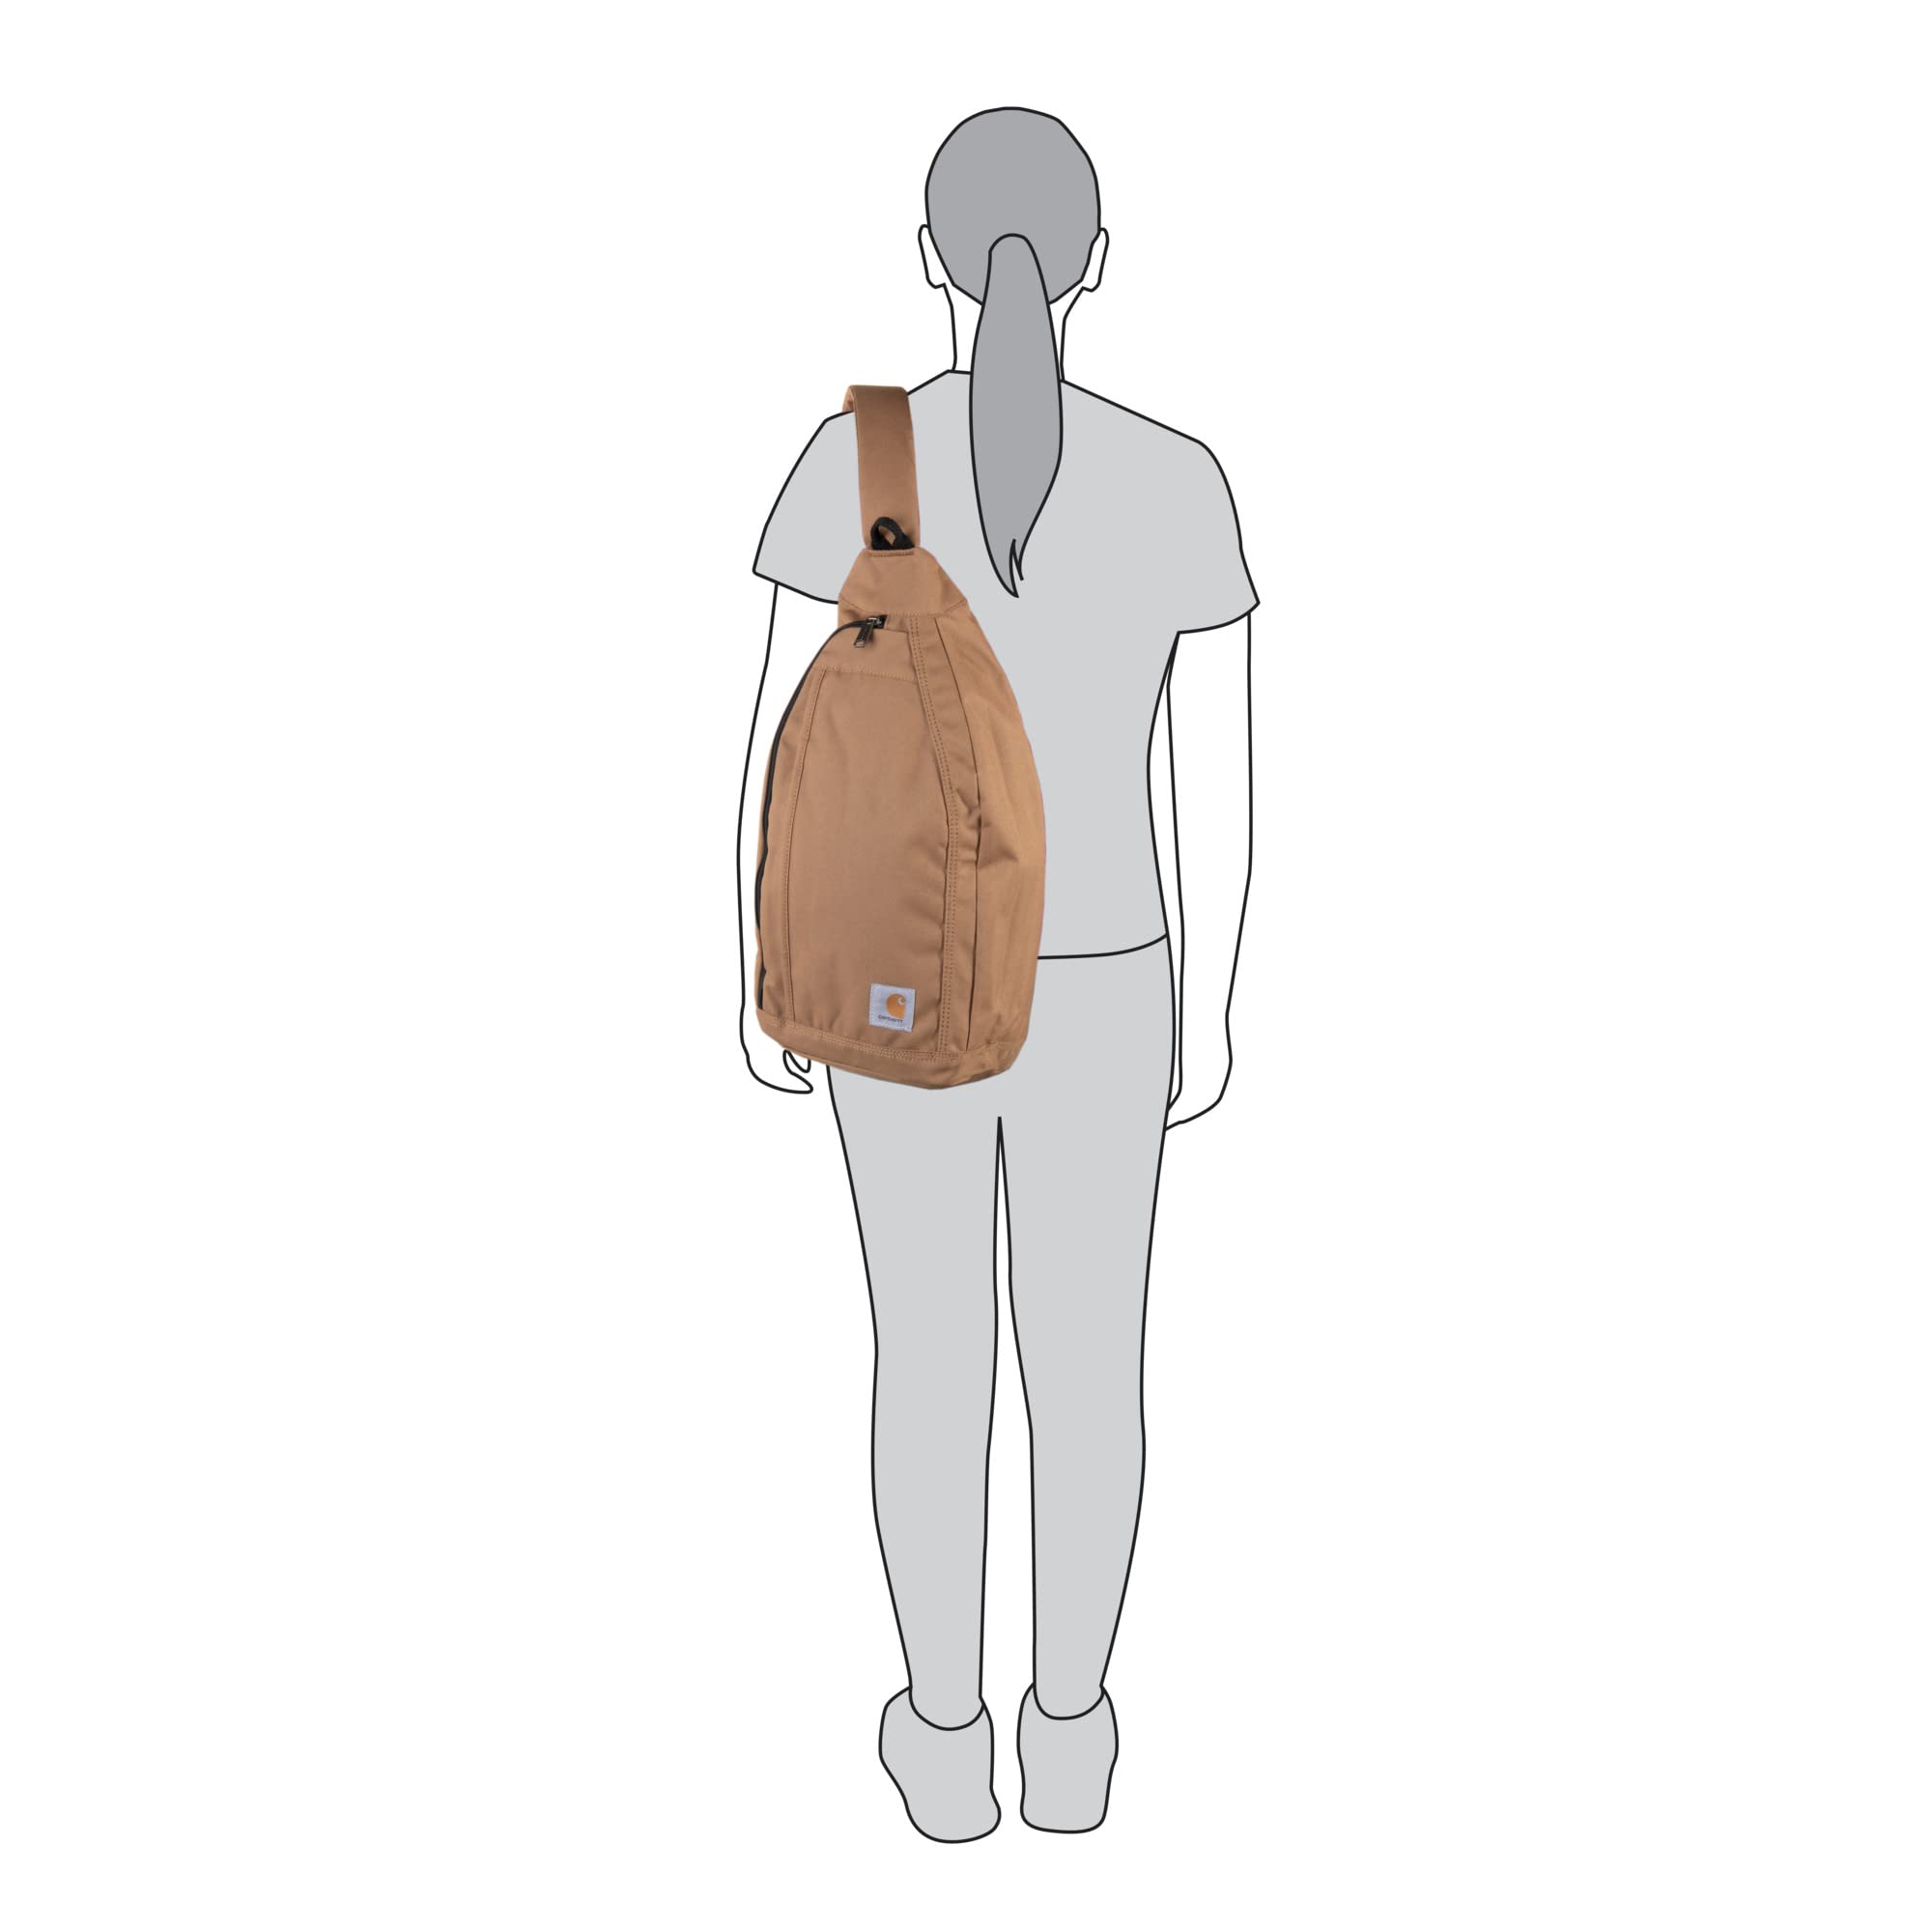 Carhartt Mono Sling Backpack, Unisex Crossbody Bag for Travel and Hiking, Carhartt Brown